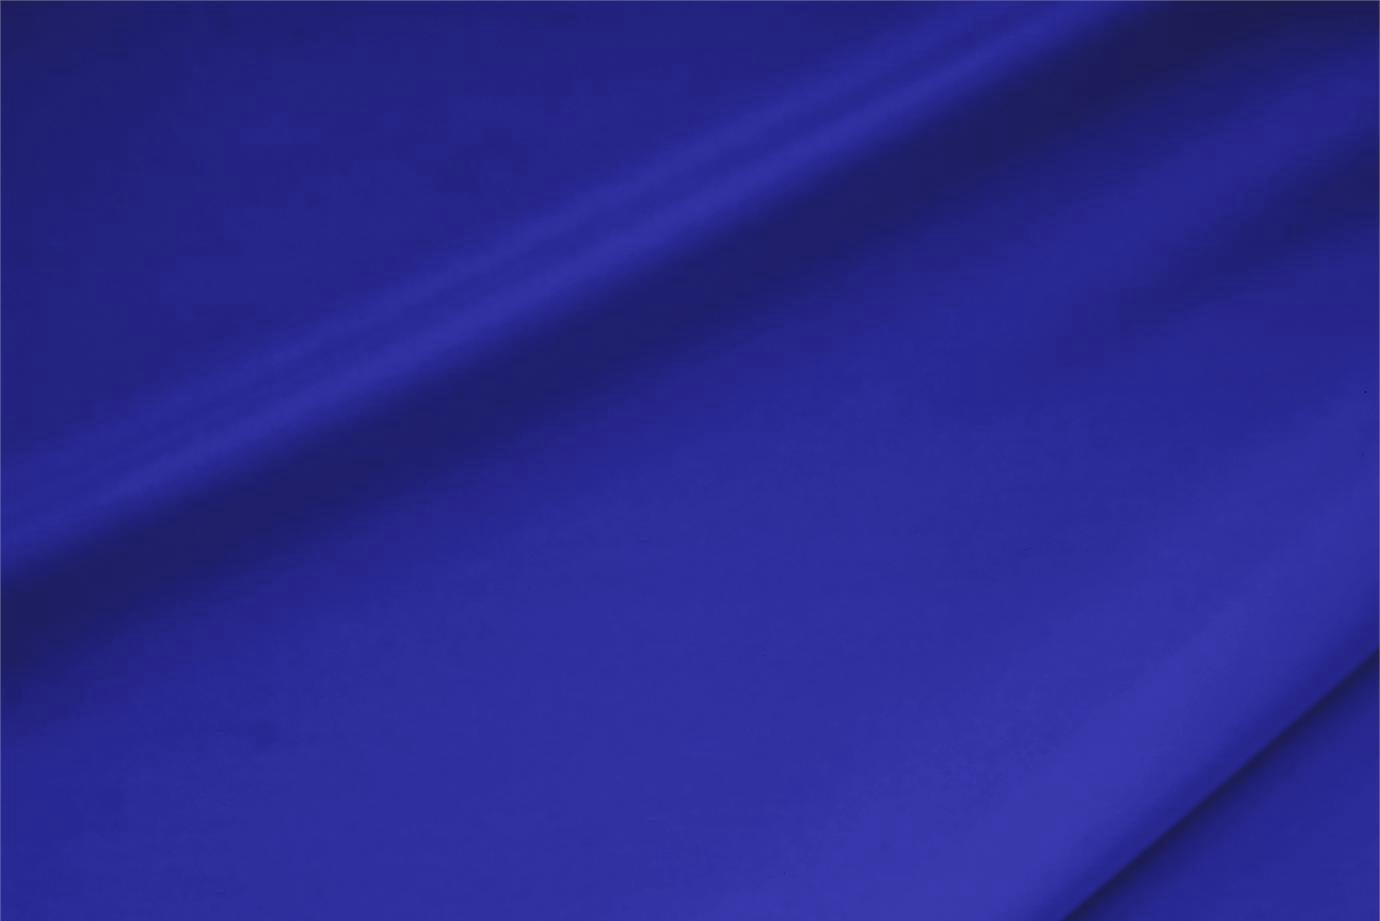 Royal Blue Silk, Stretch Crêpe de Chine Stretch fabric for dressmaking